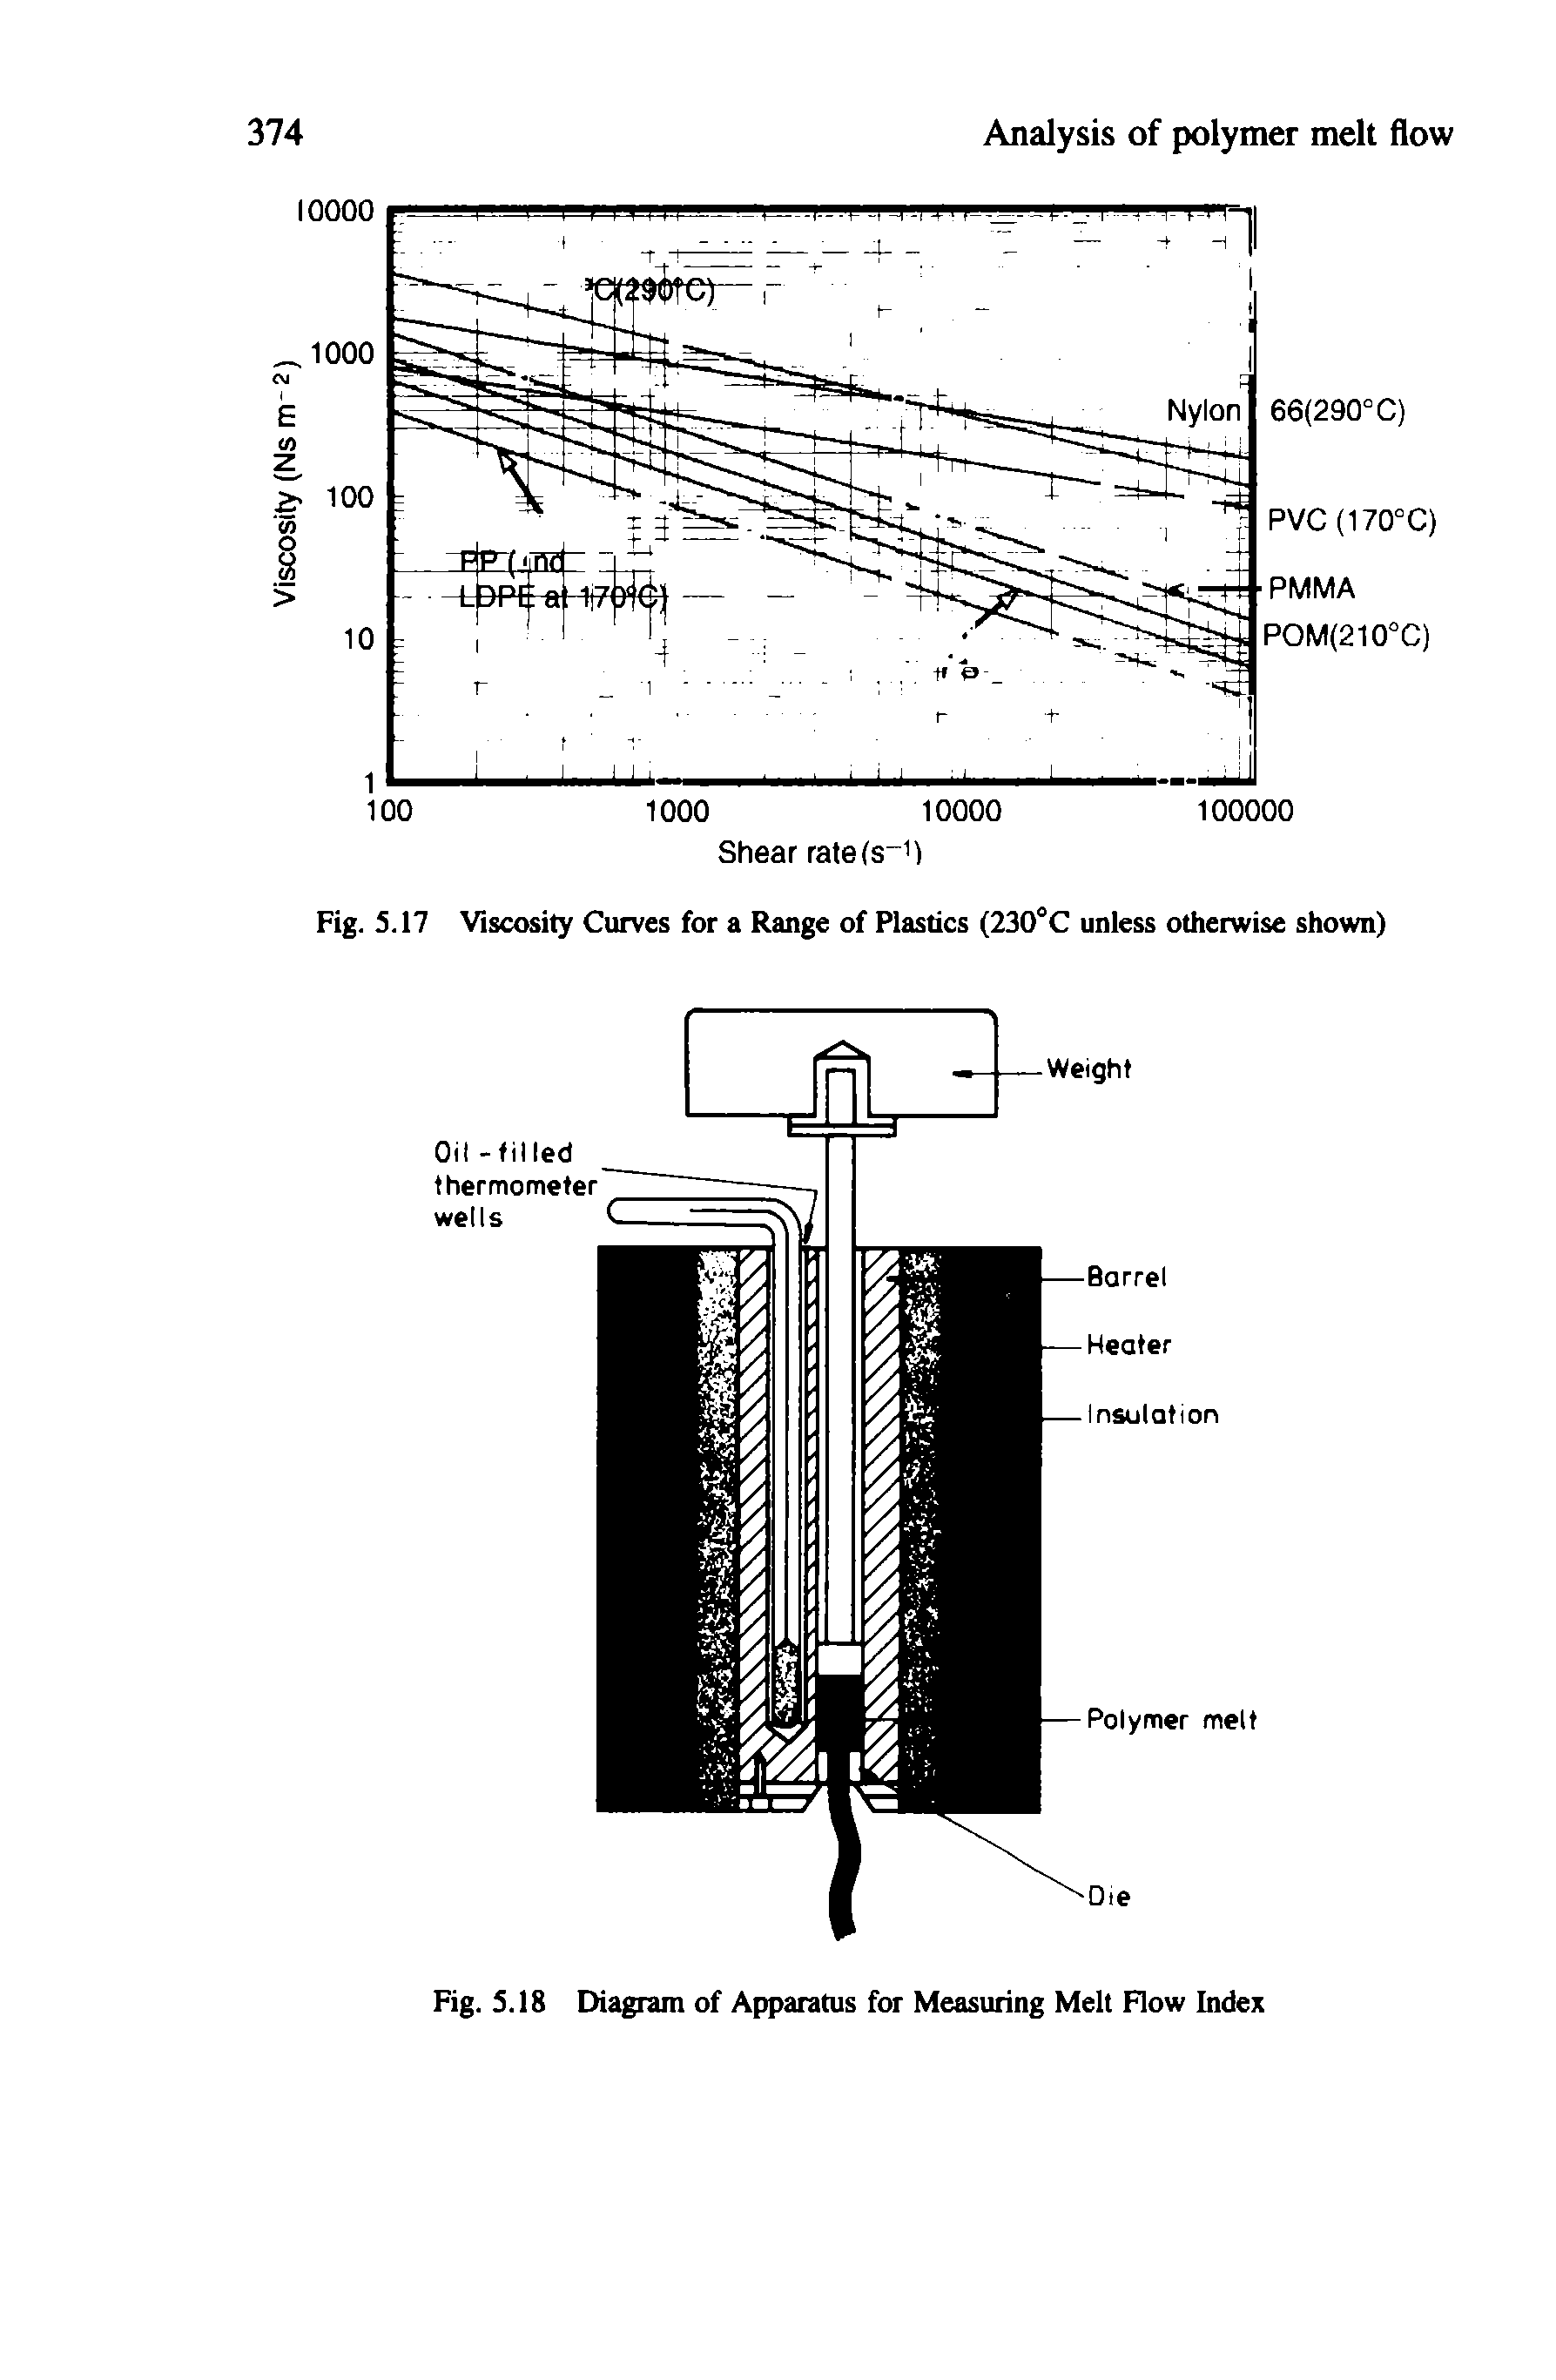 Fig. 5.18 Diagram of Apparatus for Measuring Melt Flow Index...